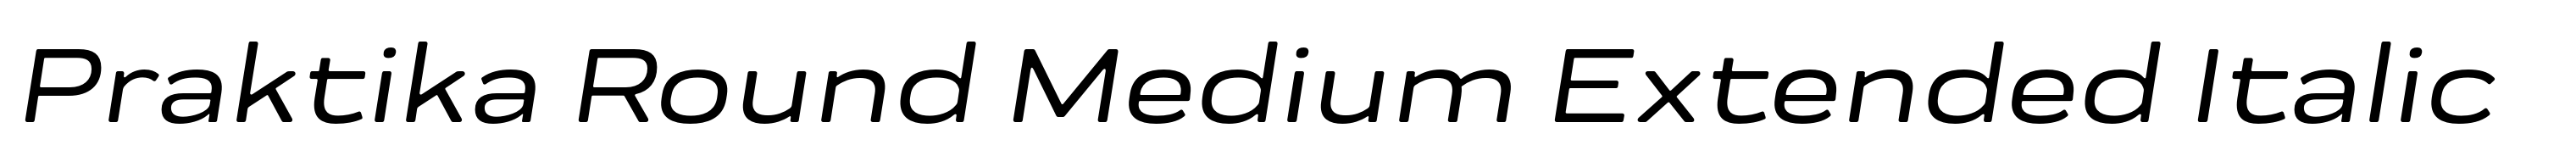 Praktika Round Medium Extended Italic